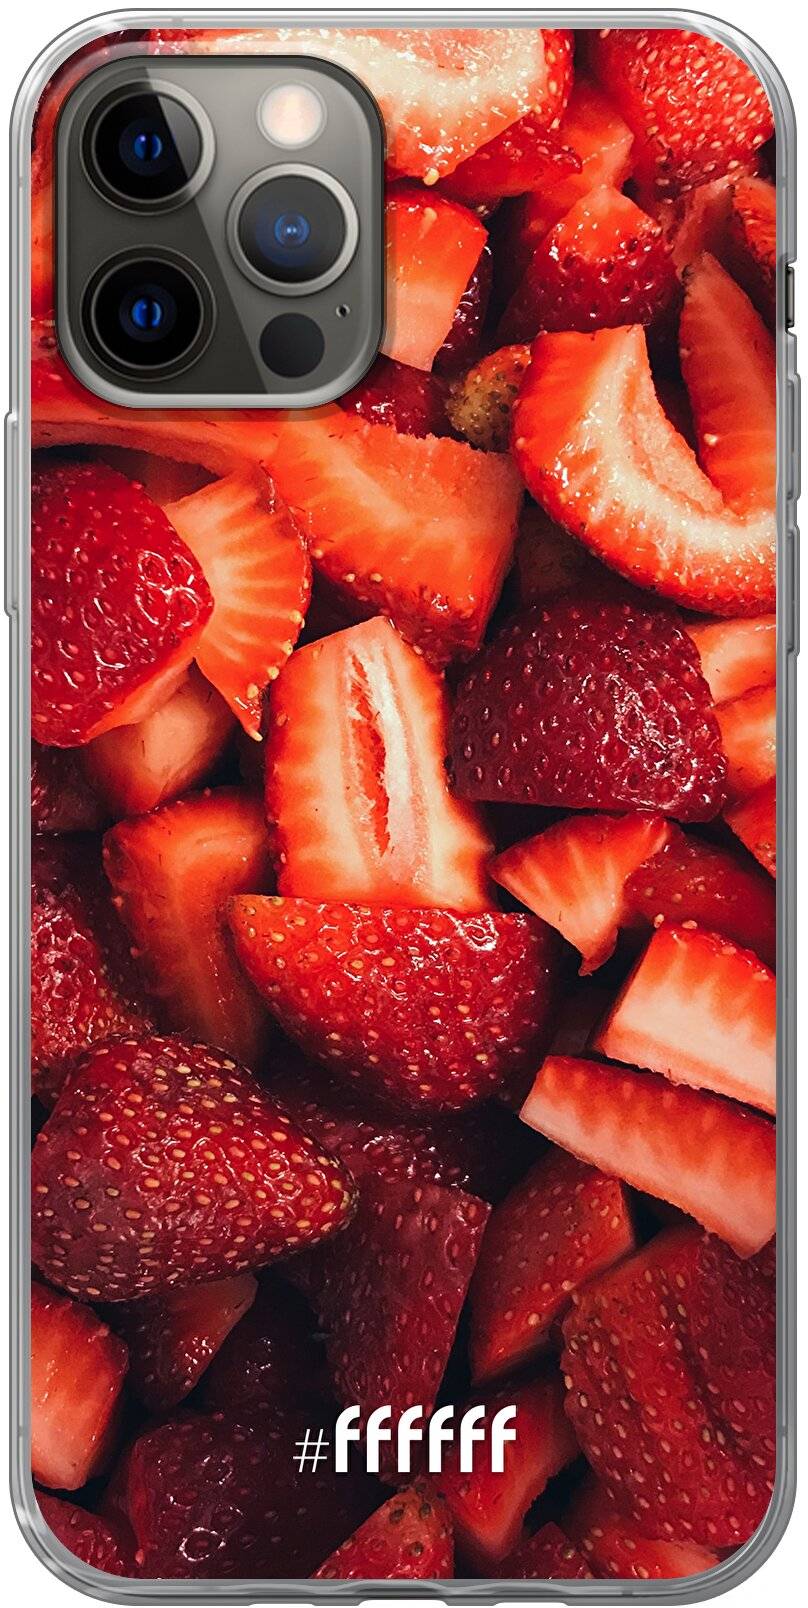 Strawberry Fields iPhone 12 Pro